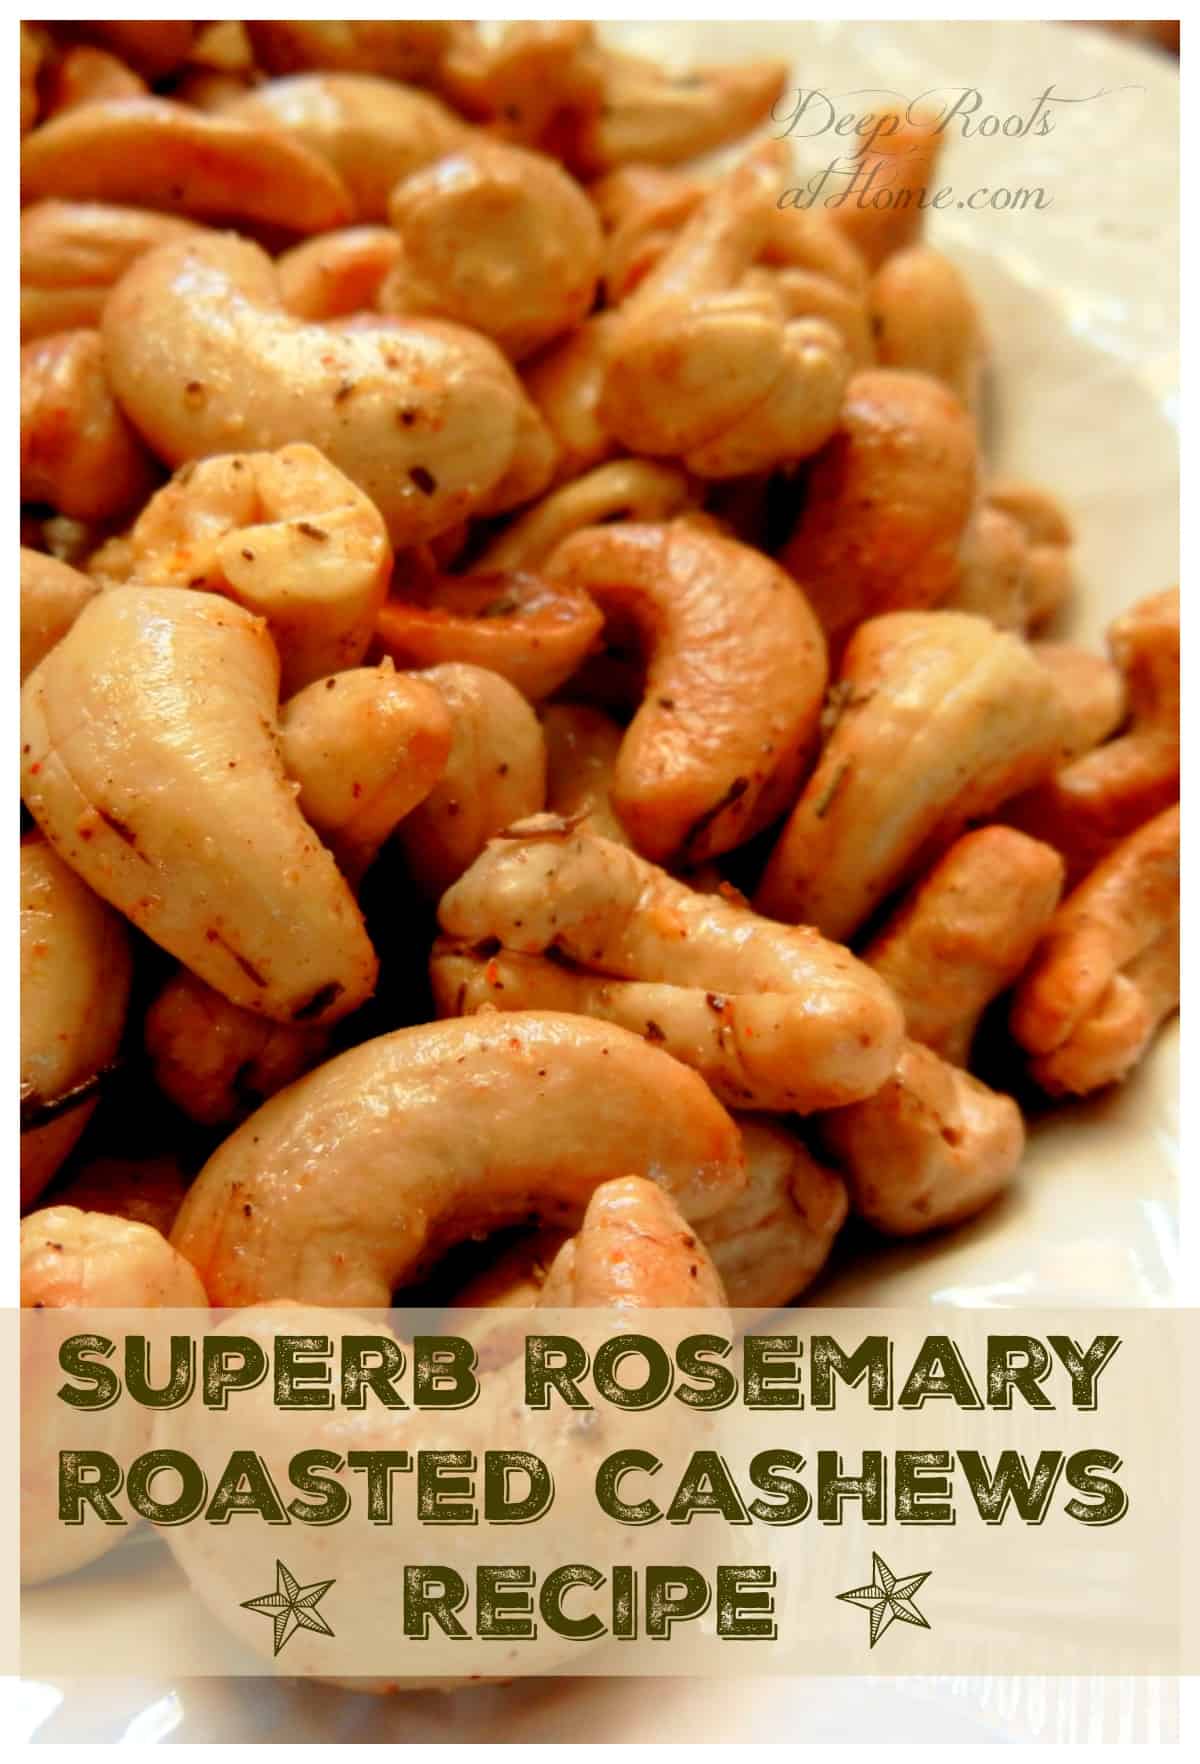 Superb Rosemary Roasted Cashews Recipe & Candid Camera. Fresh roasted cashews with rosemary and spices